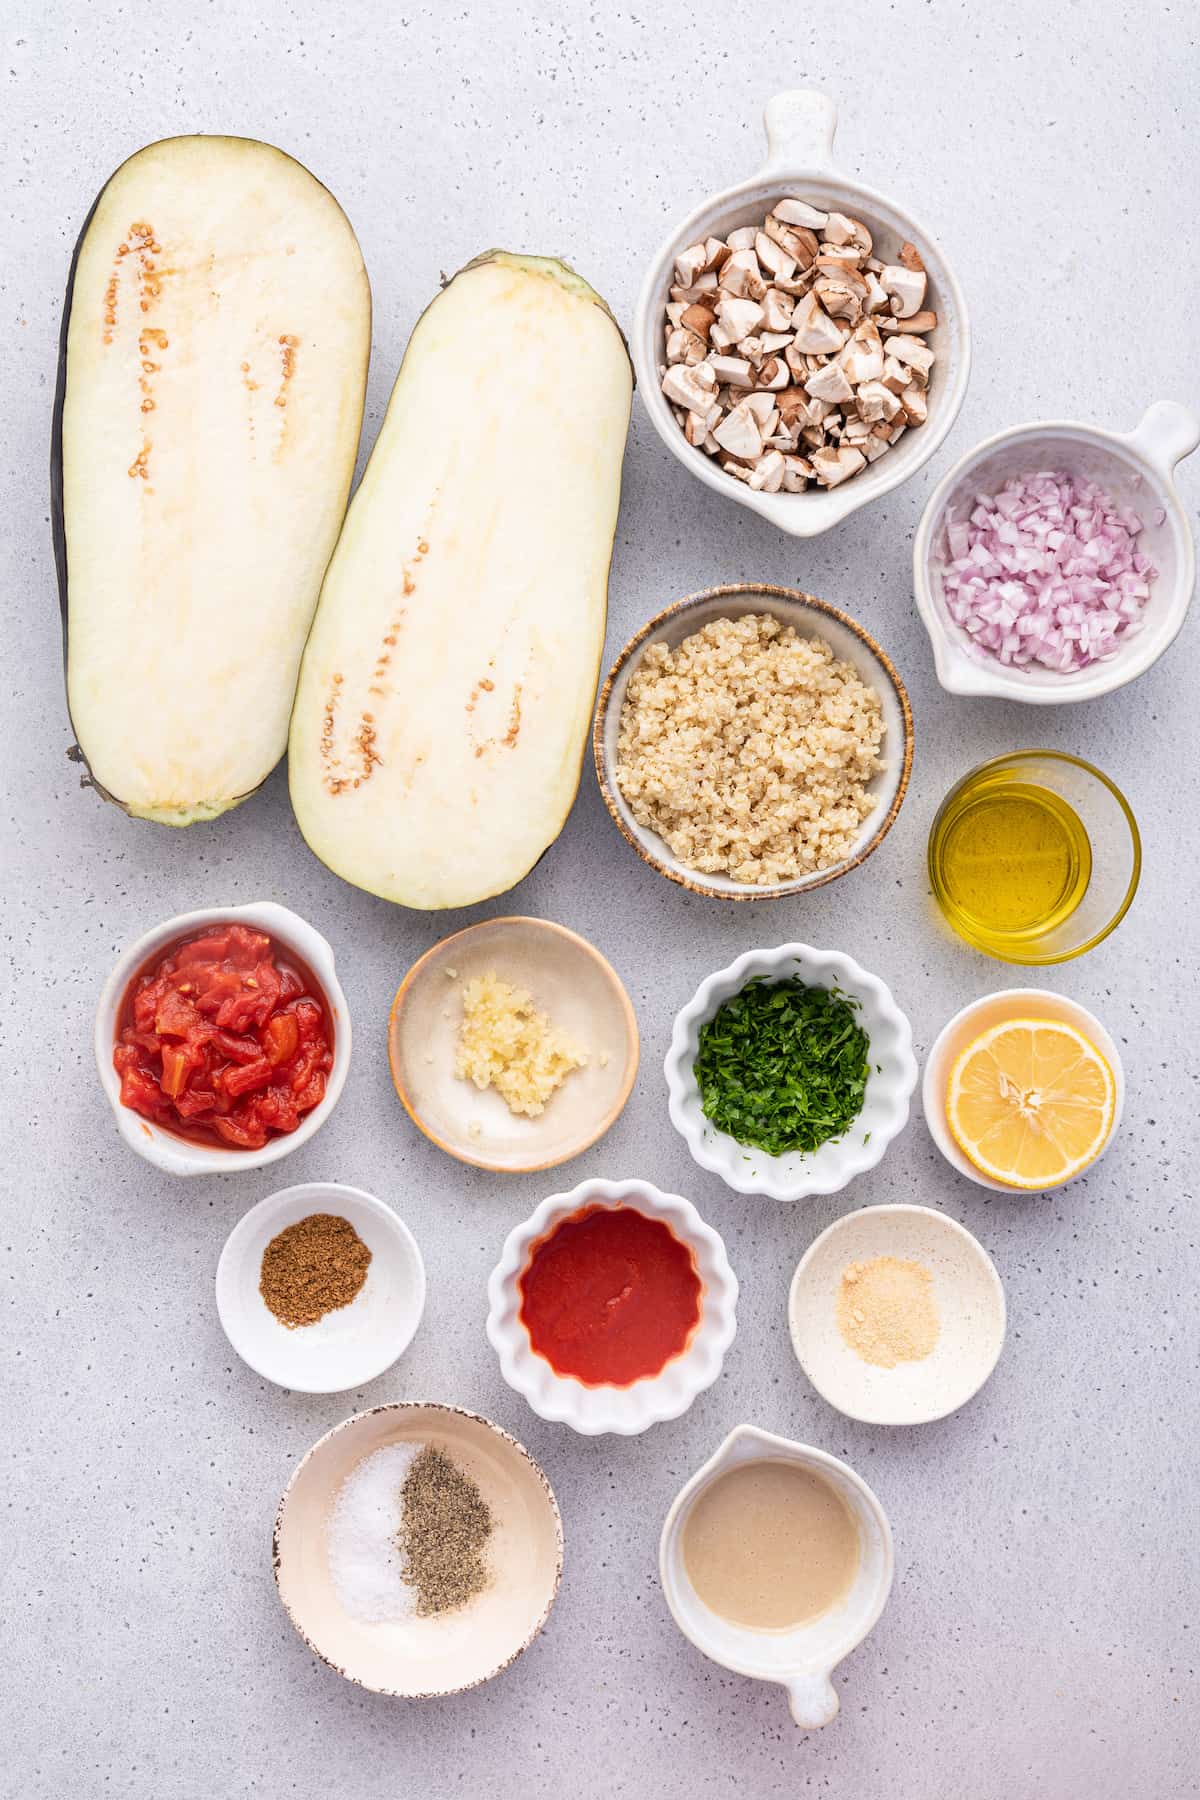 Overhead view of ingredients for quinoa stuffed eggplant